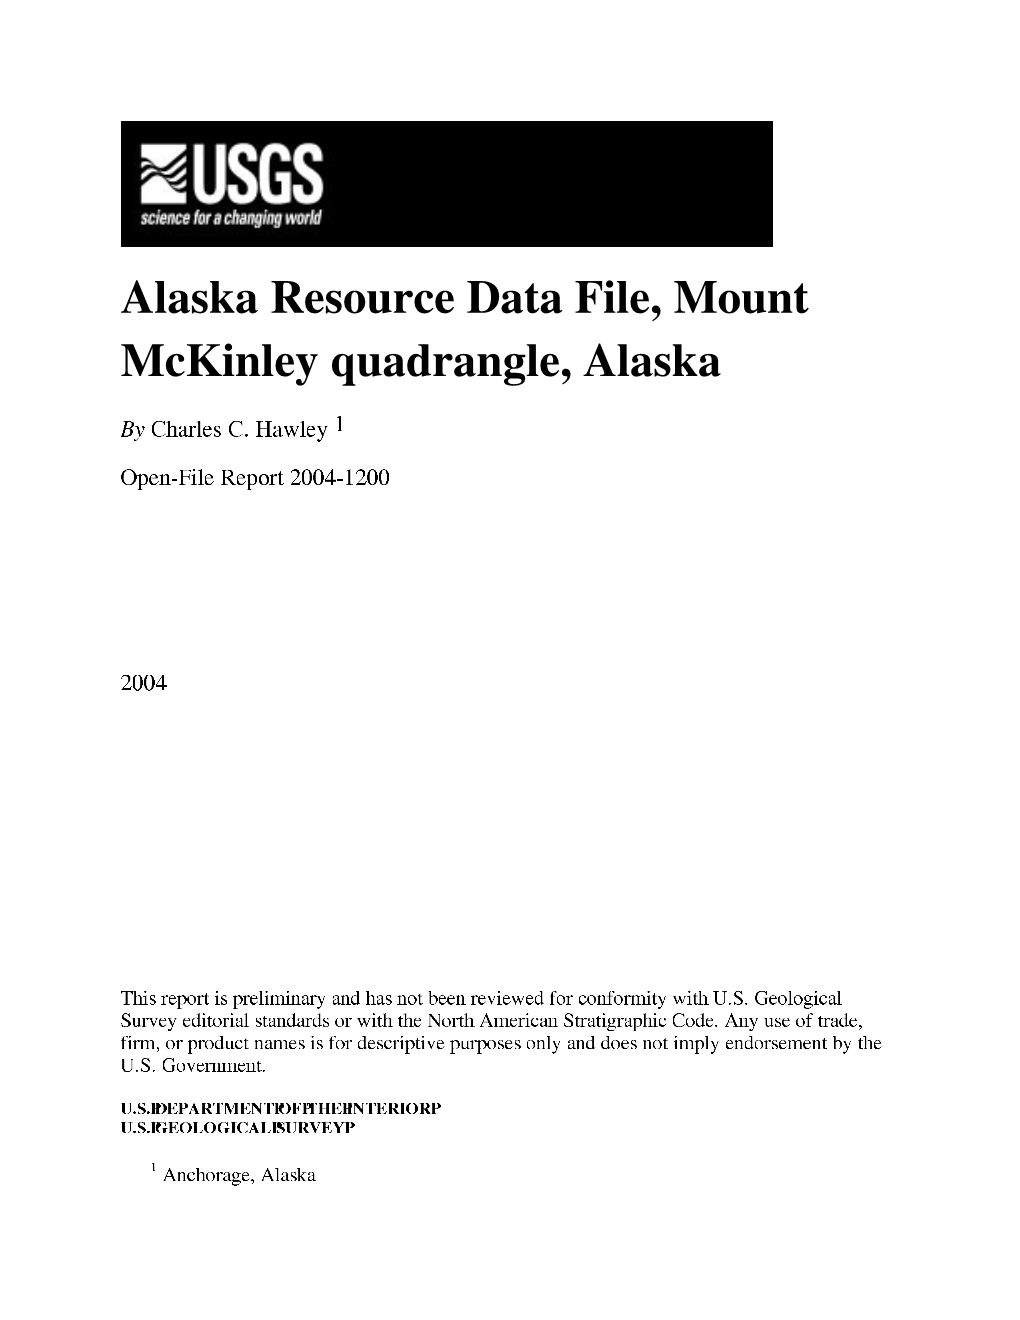 Alaska Resource Data File, Mount Mckinley Quadrangle, Alaska